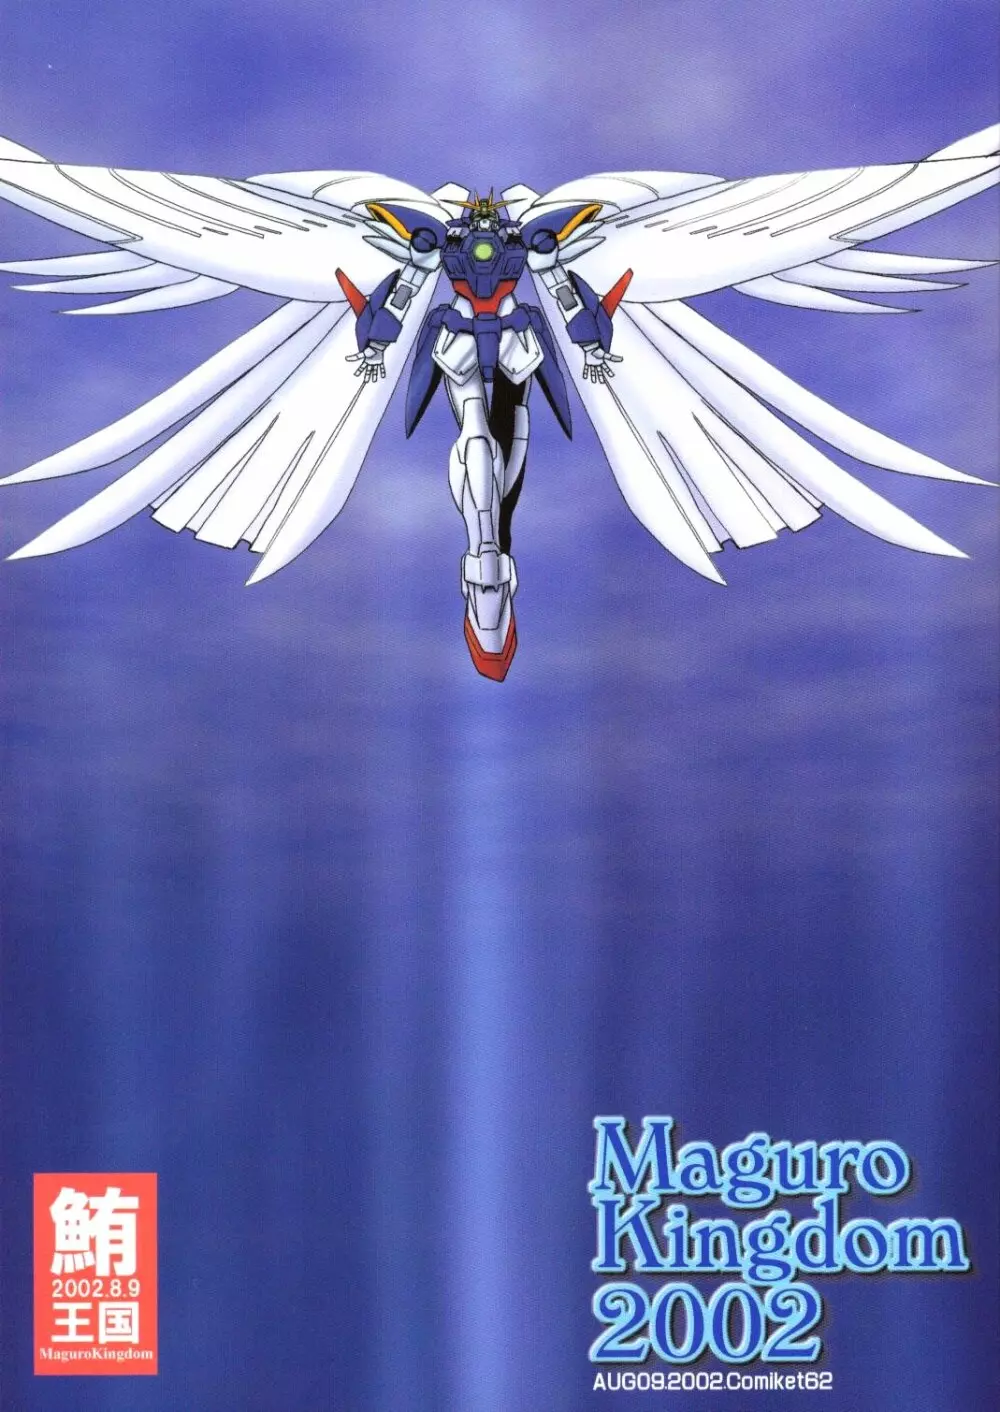 Maguro Kingdom 2002 - page1